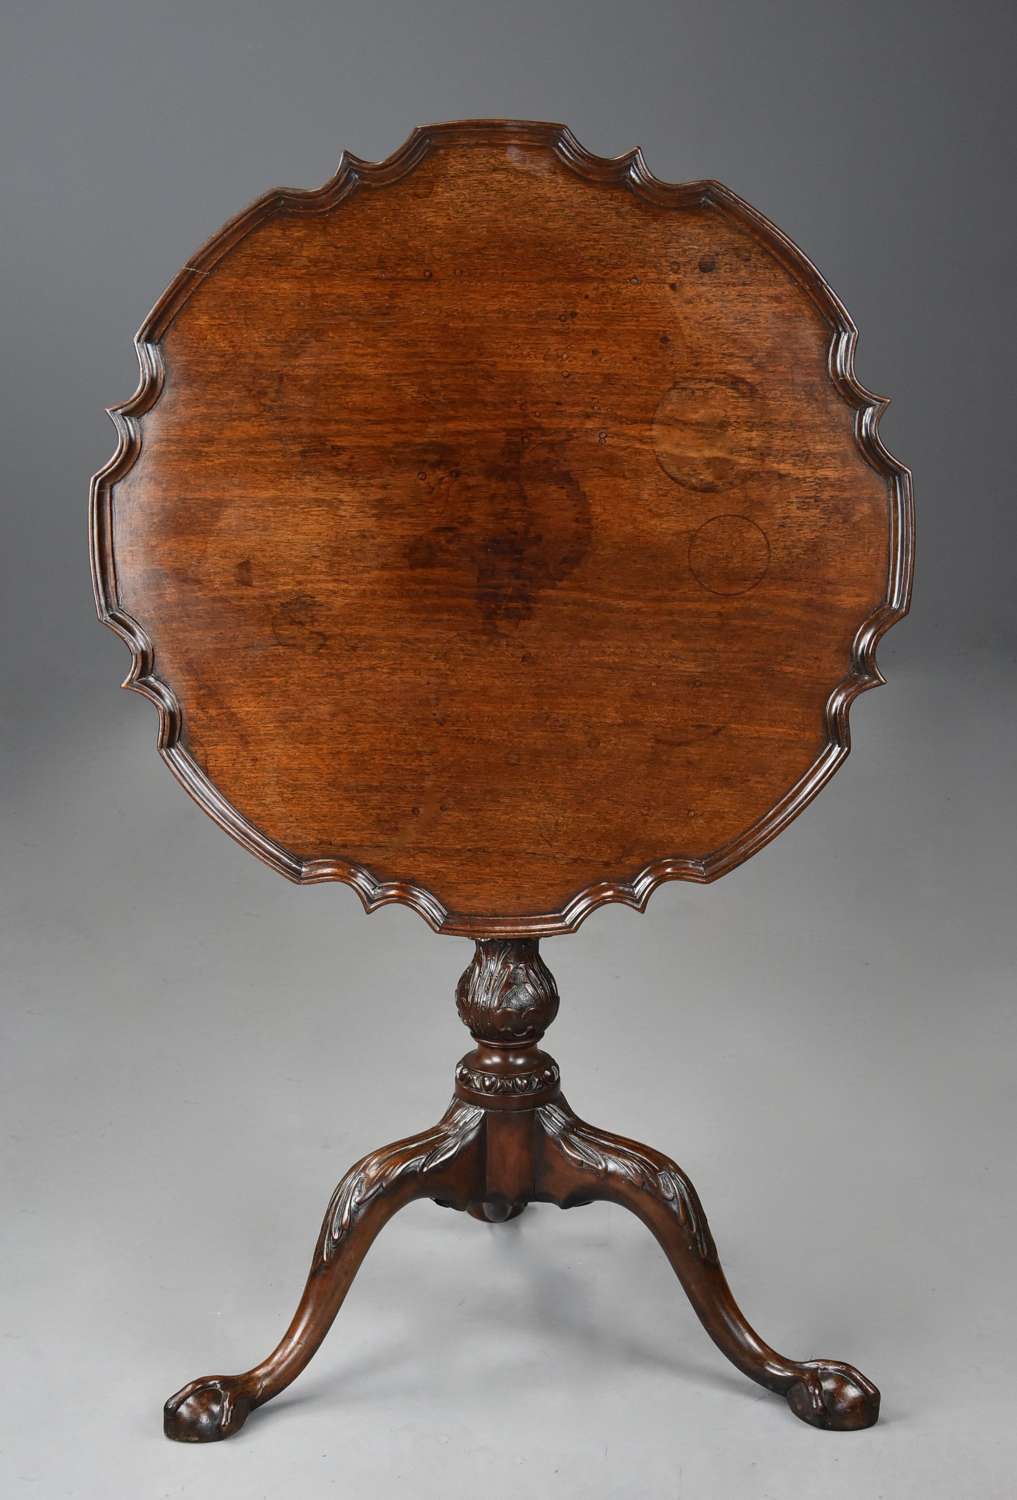 Fine 18thc George II mahogany tripod table with superb original patina